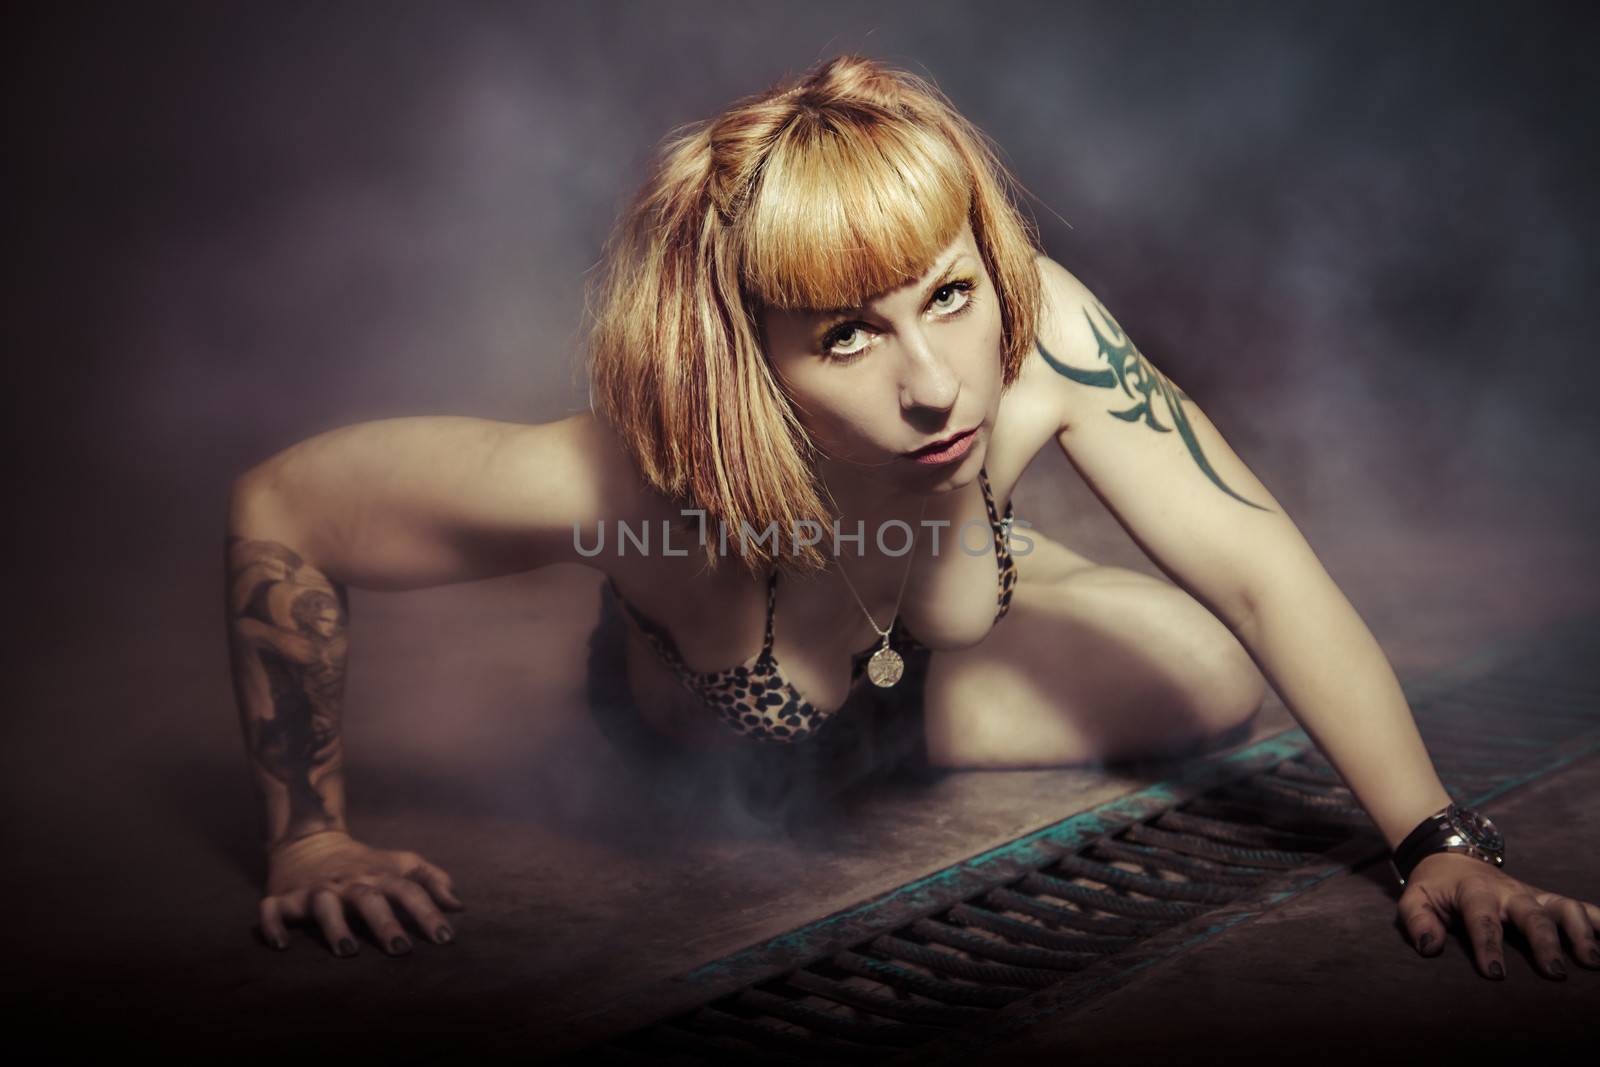 Erotic female model. Blonde girl in industrial scene by FernandoCortes